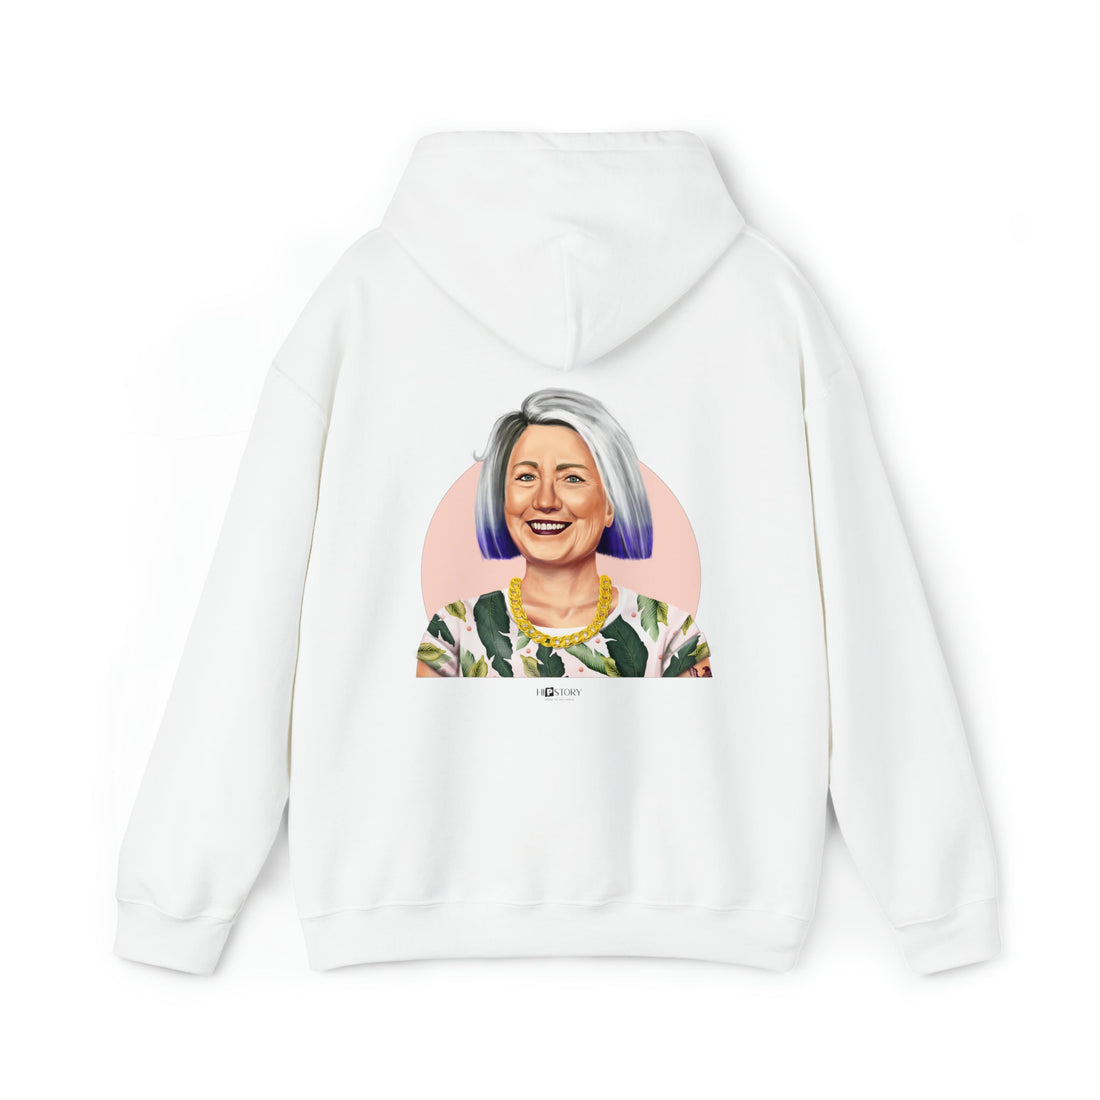 Hillary Clinton Hipstory Hooded Sweatshirt - Hipstory Shop